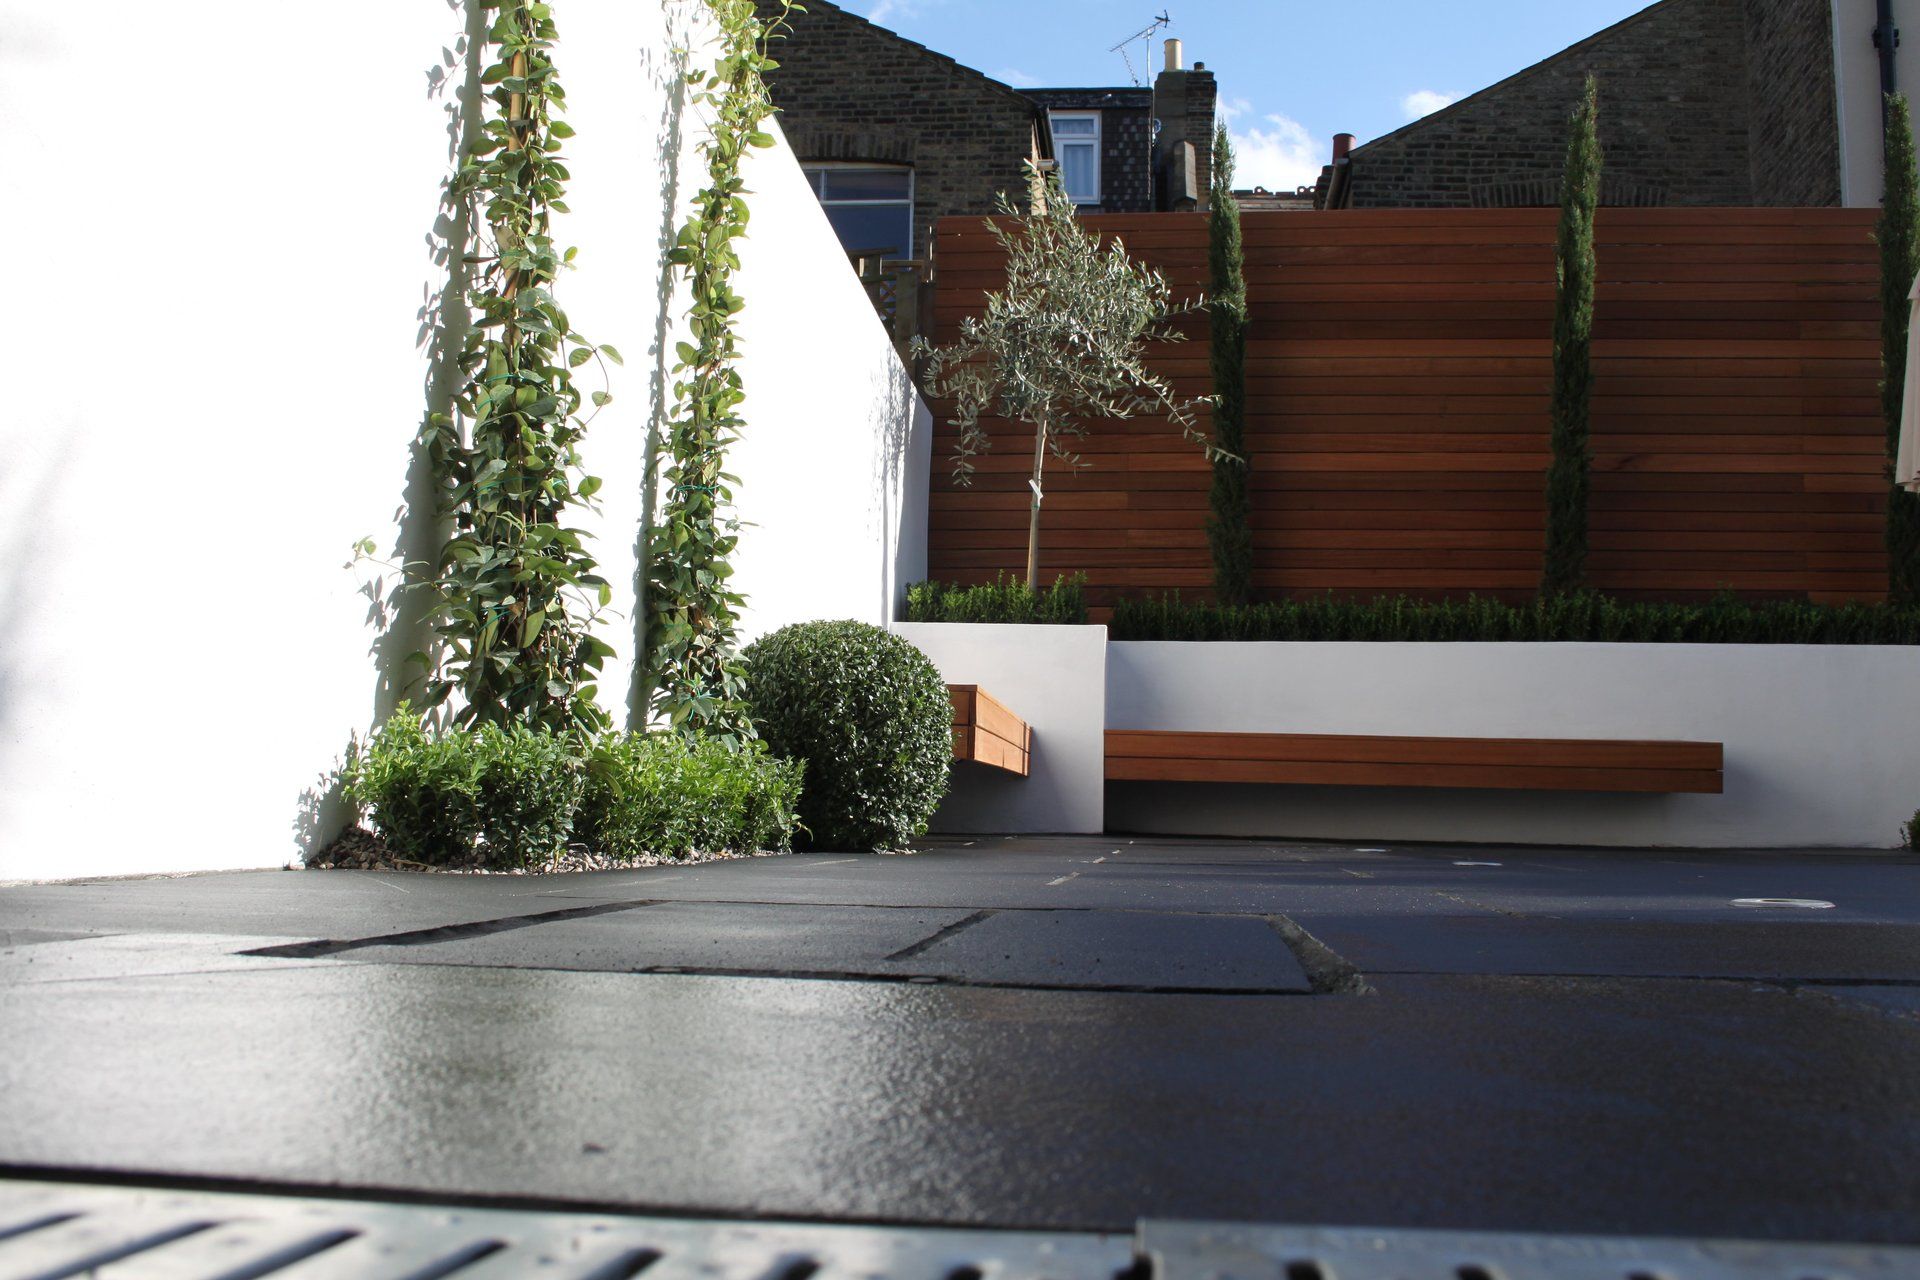 London Garden Builders black limestone,modern garden,floating bench,hardwood fence,retaining wall, raised beds